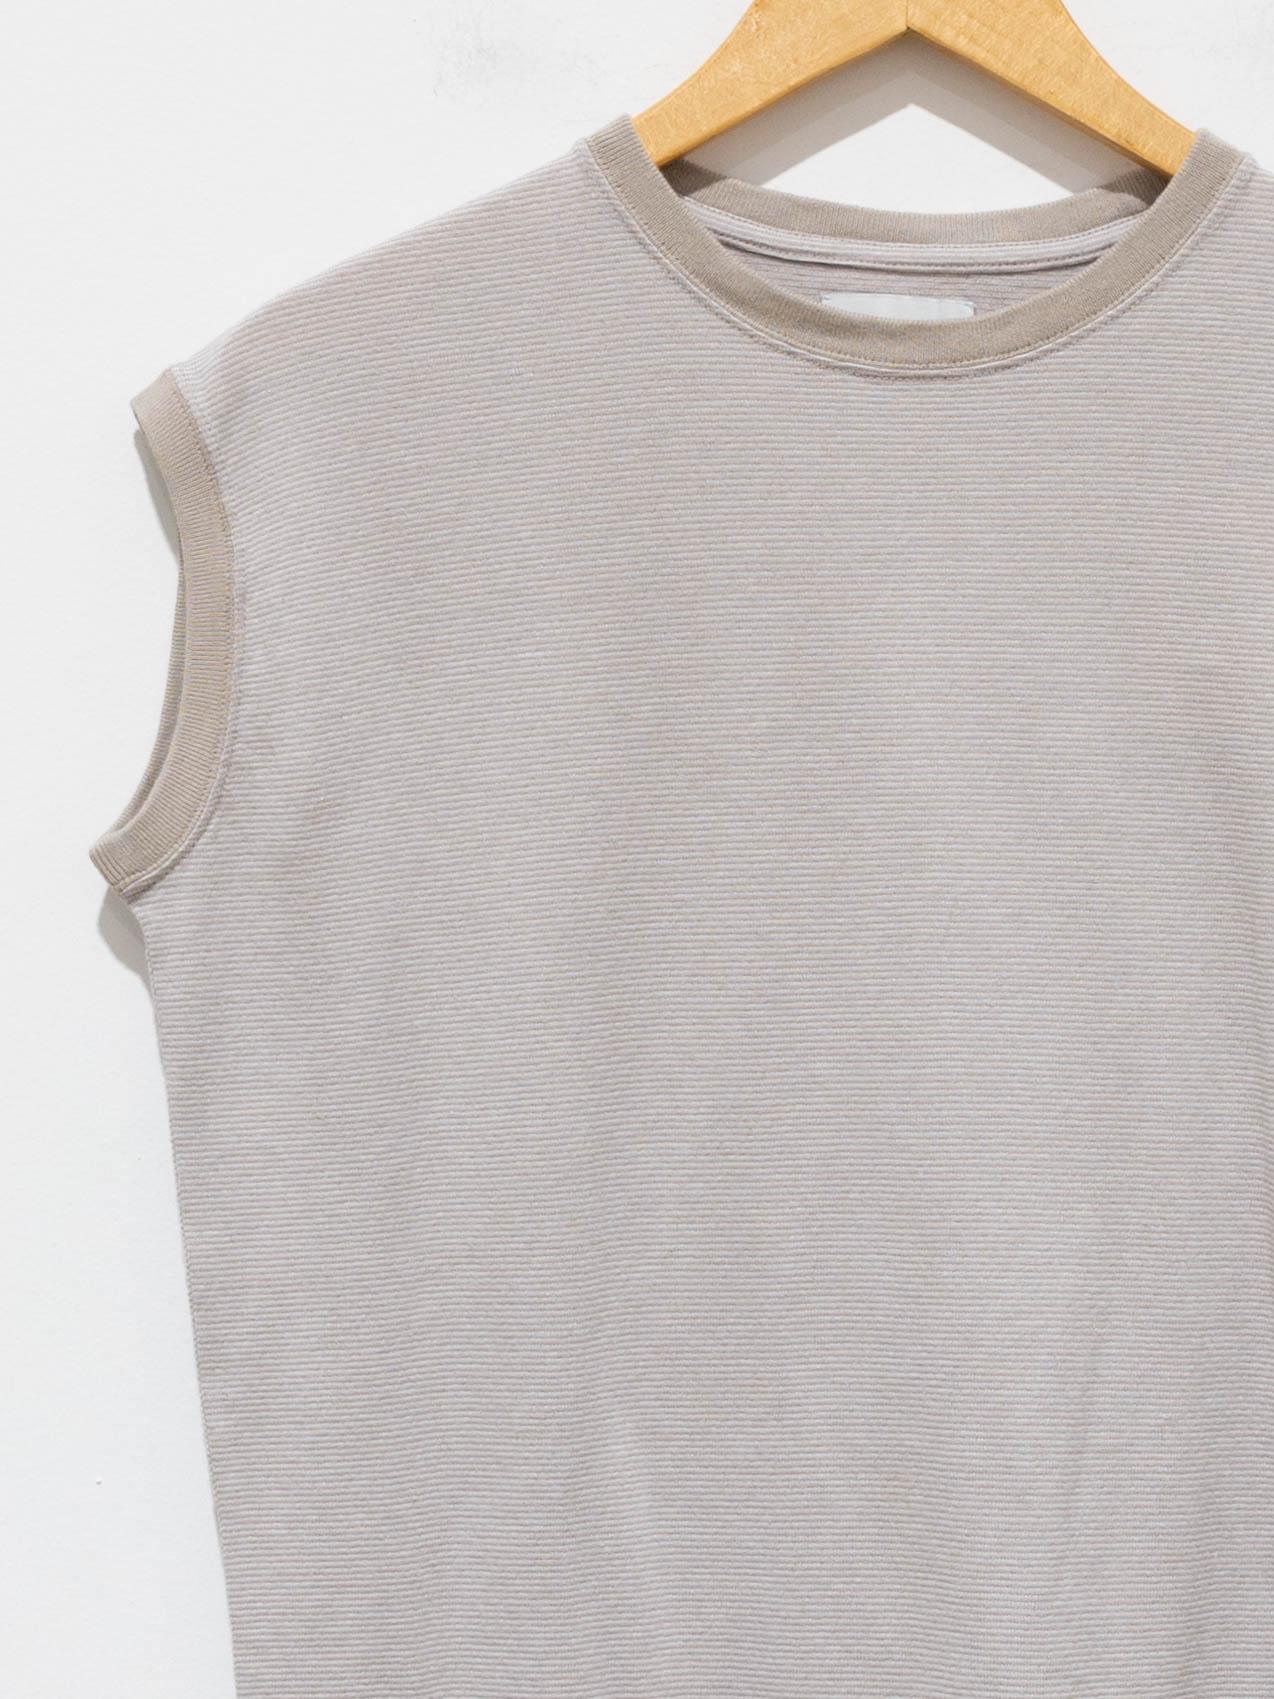 Namu Shop - Phlannel Cotton Linen Links Border Sleeveless T-Shirt - Beige